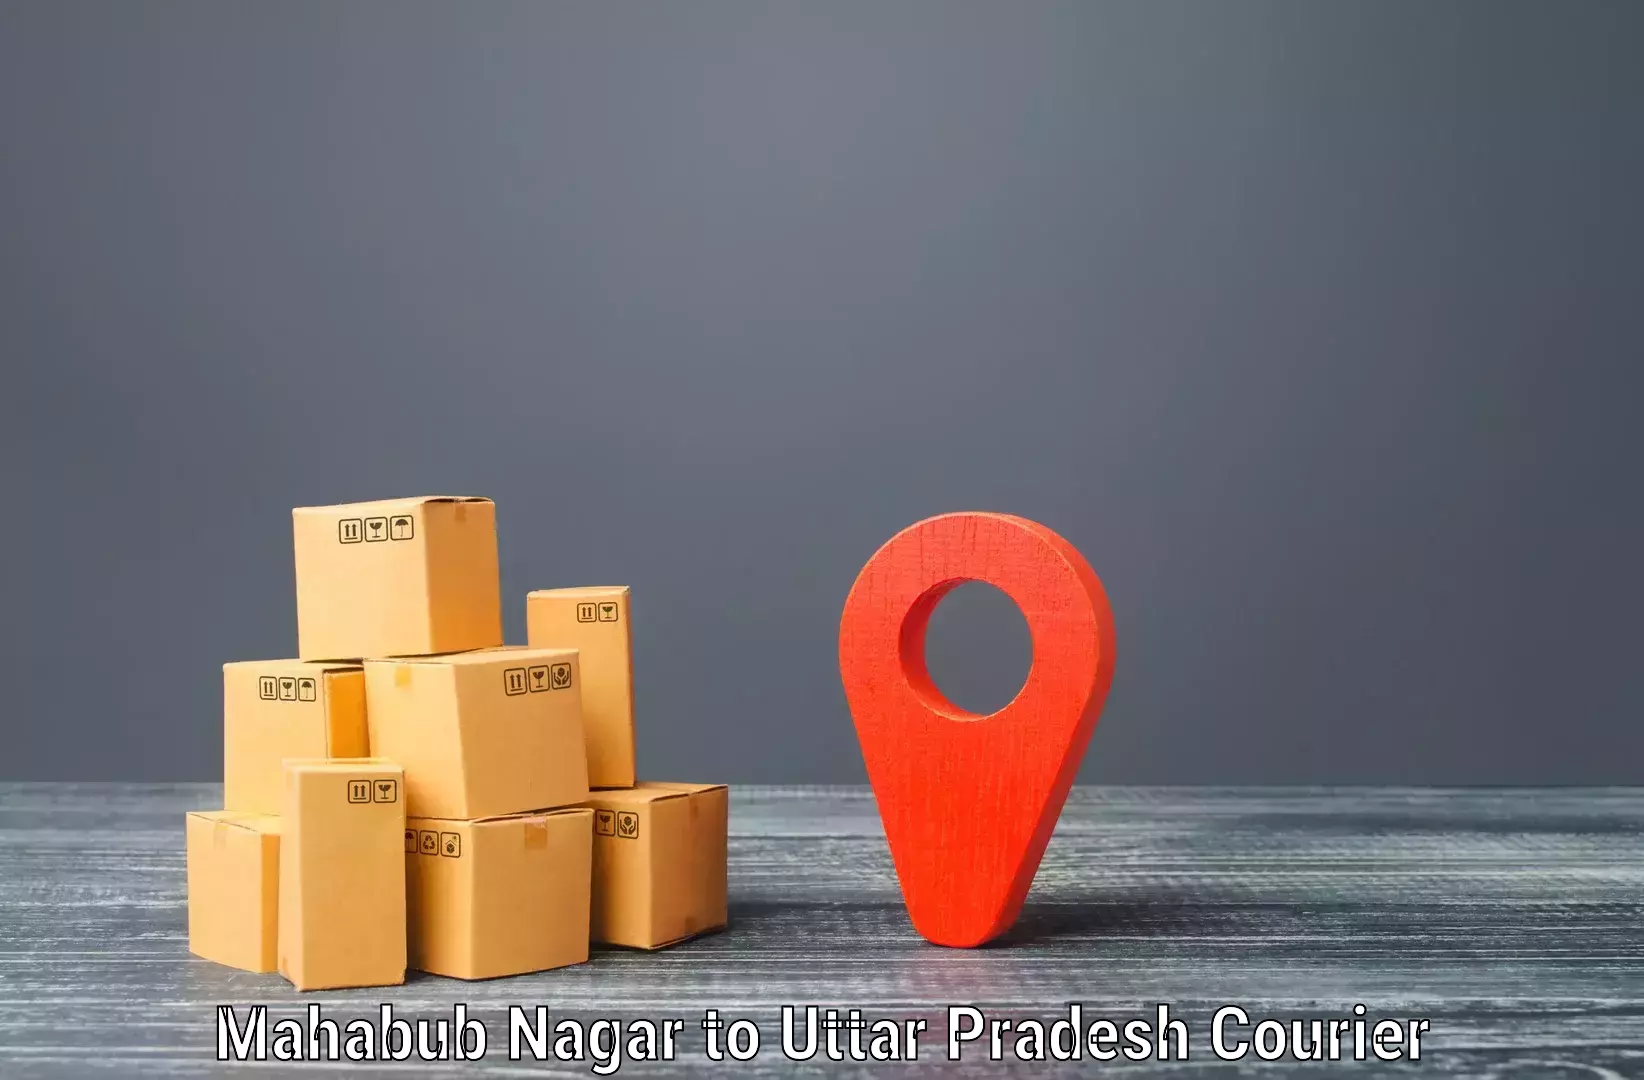 Quick dispatch service in Mahabub Nagar to Gorakhpur